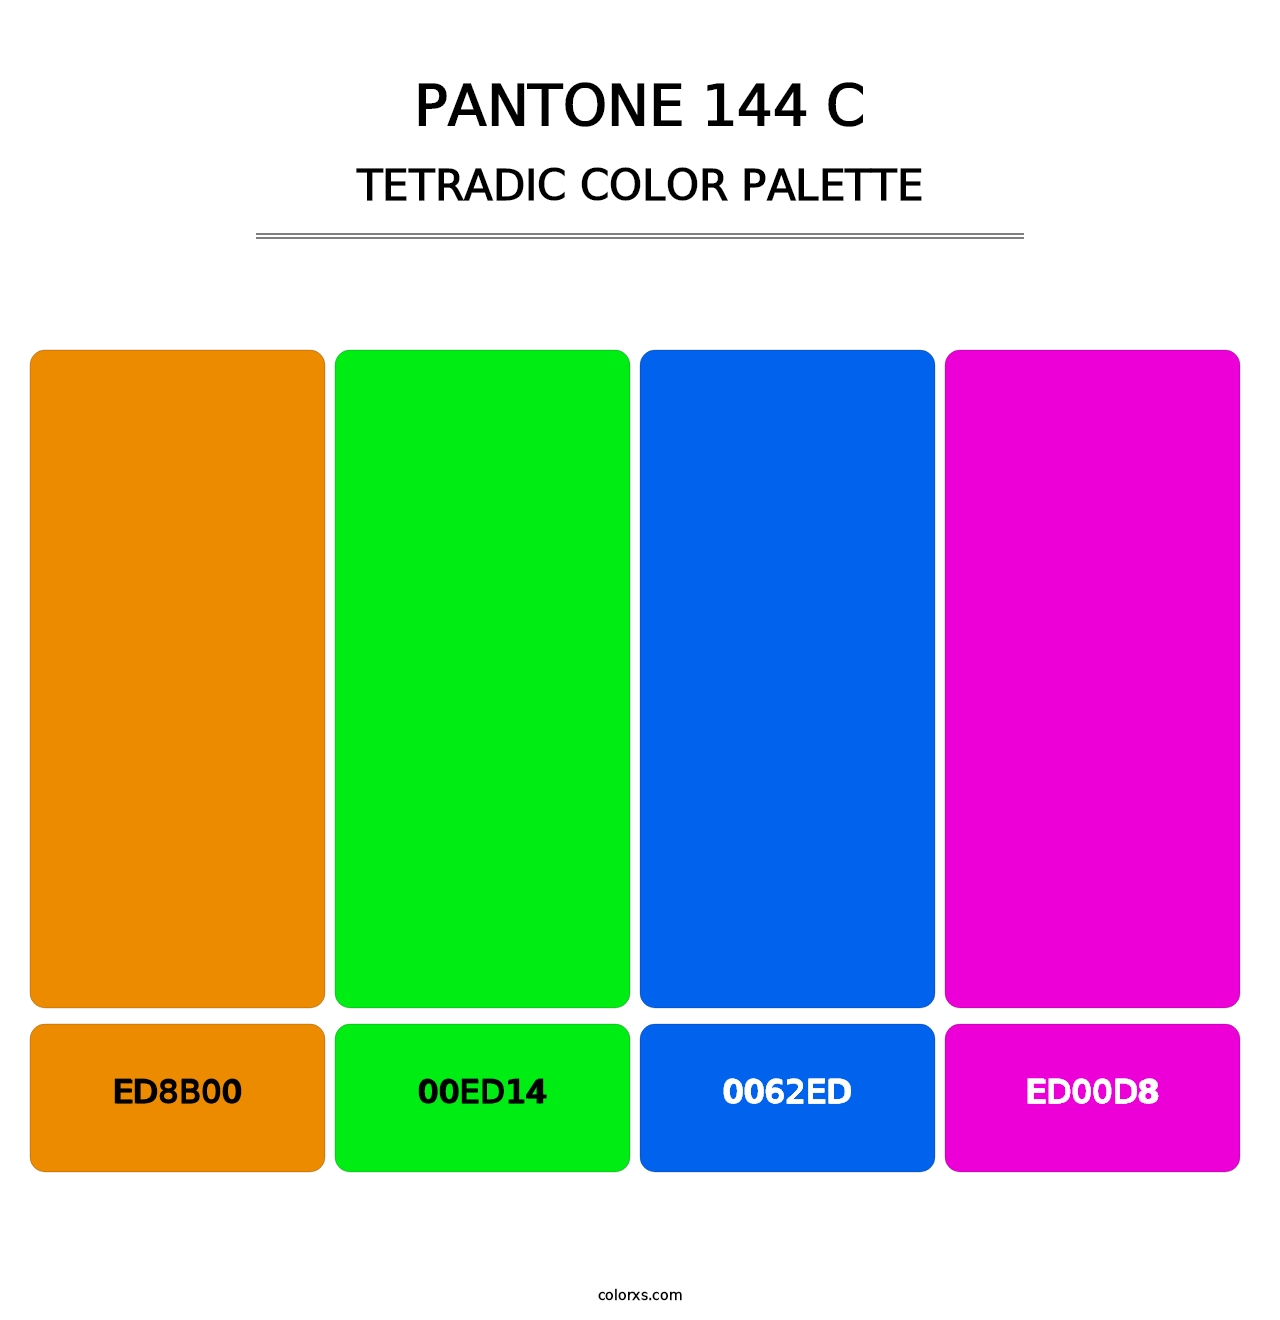 PANTONE 144 C - Tetradic Color Palette